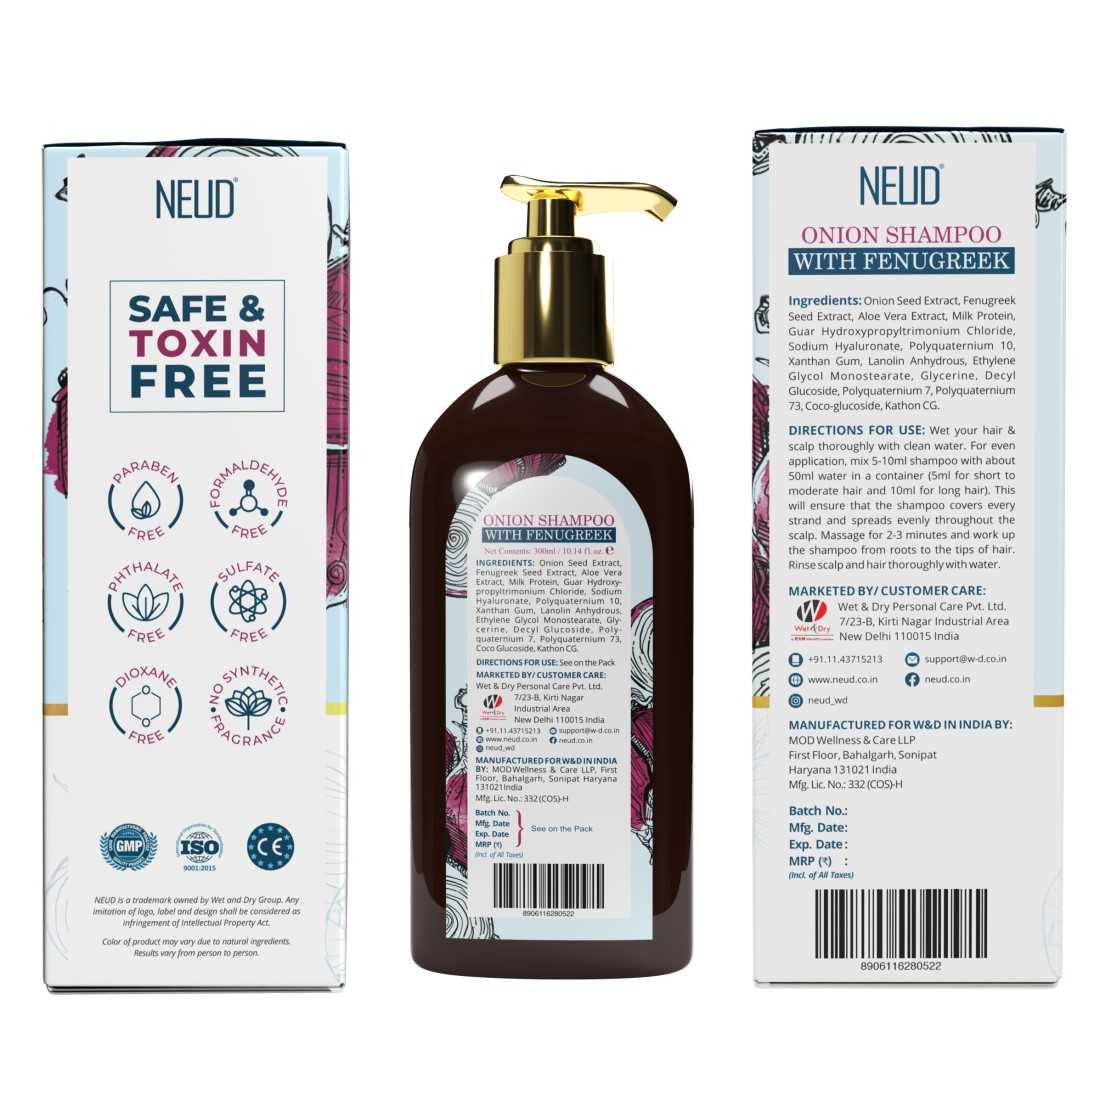 NEUD Premium Onion Hair Shampoo with Fenugreek for Men & Women - 300 ml